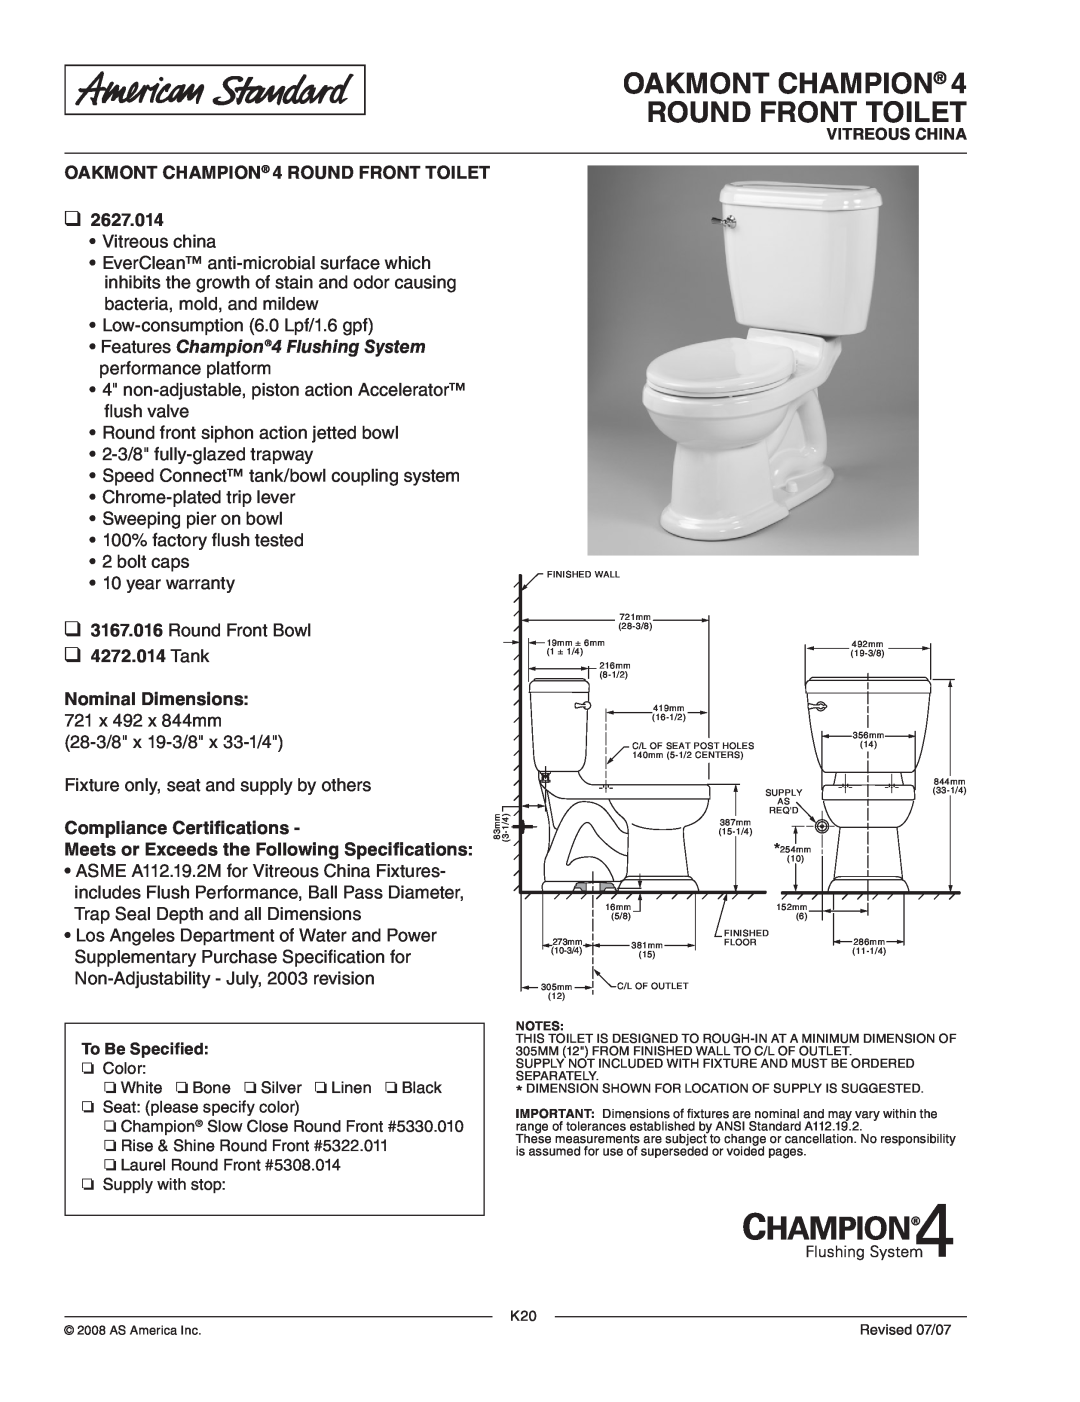 American Standard 2627.014, 3167.016 dimensions Oakmont Champion Round Front Toilet, OAKMONT CHAMPION 4 ROUND FRONT TOILET 